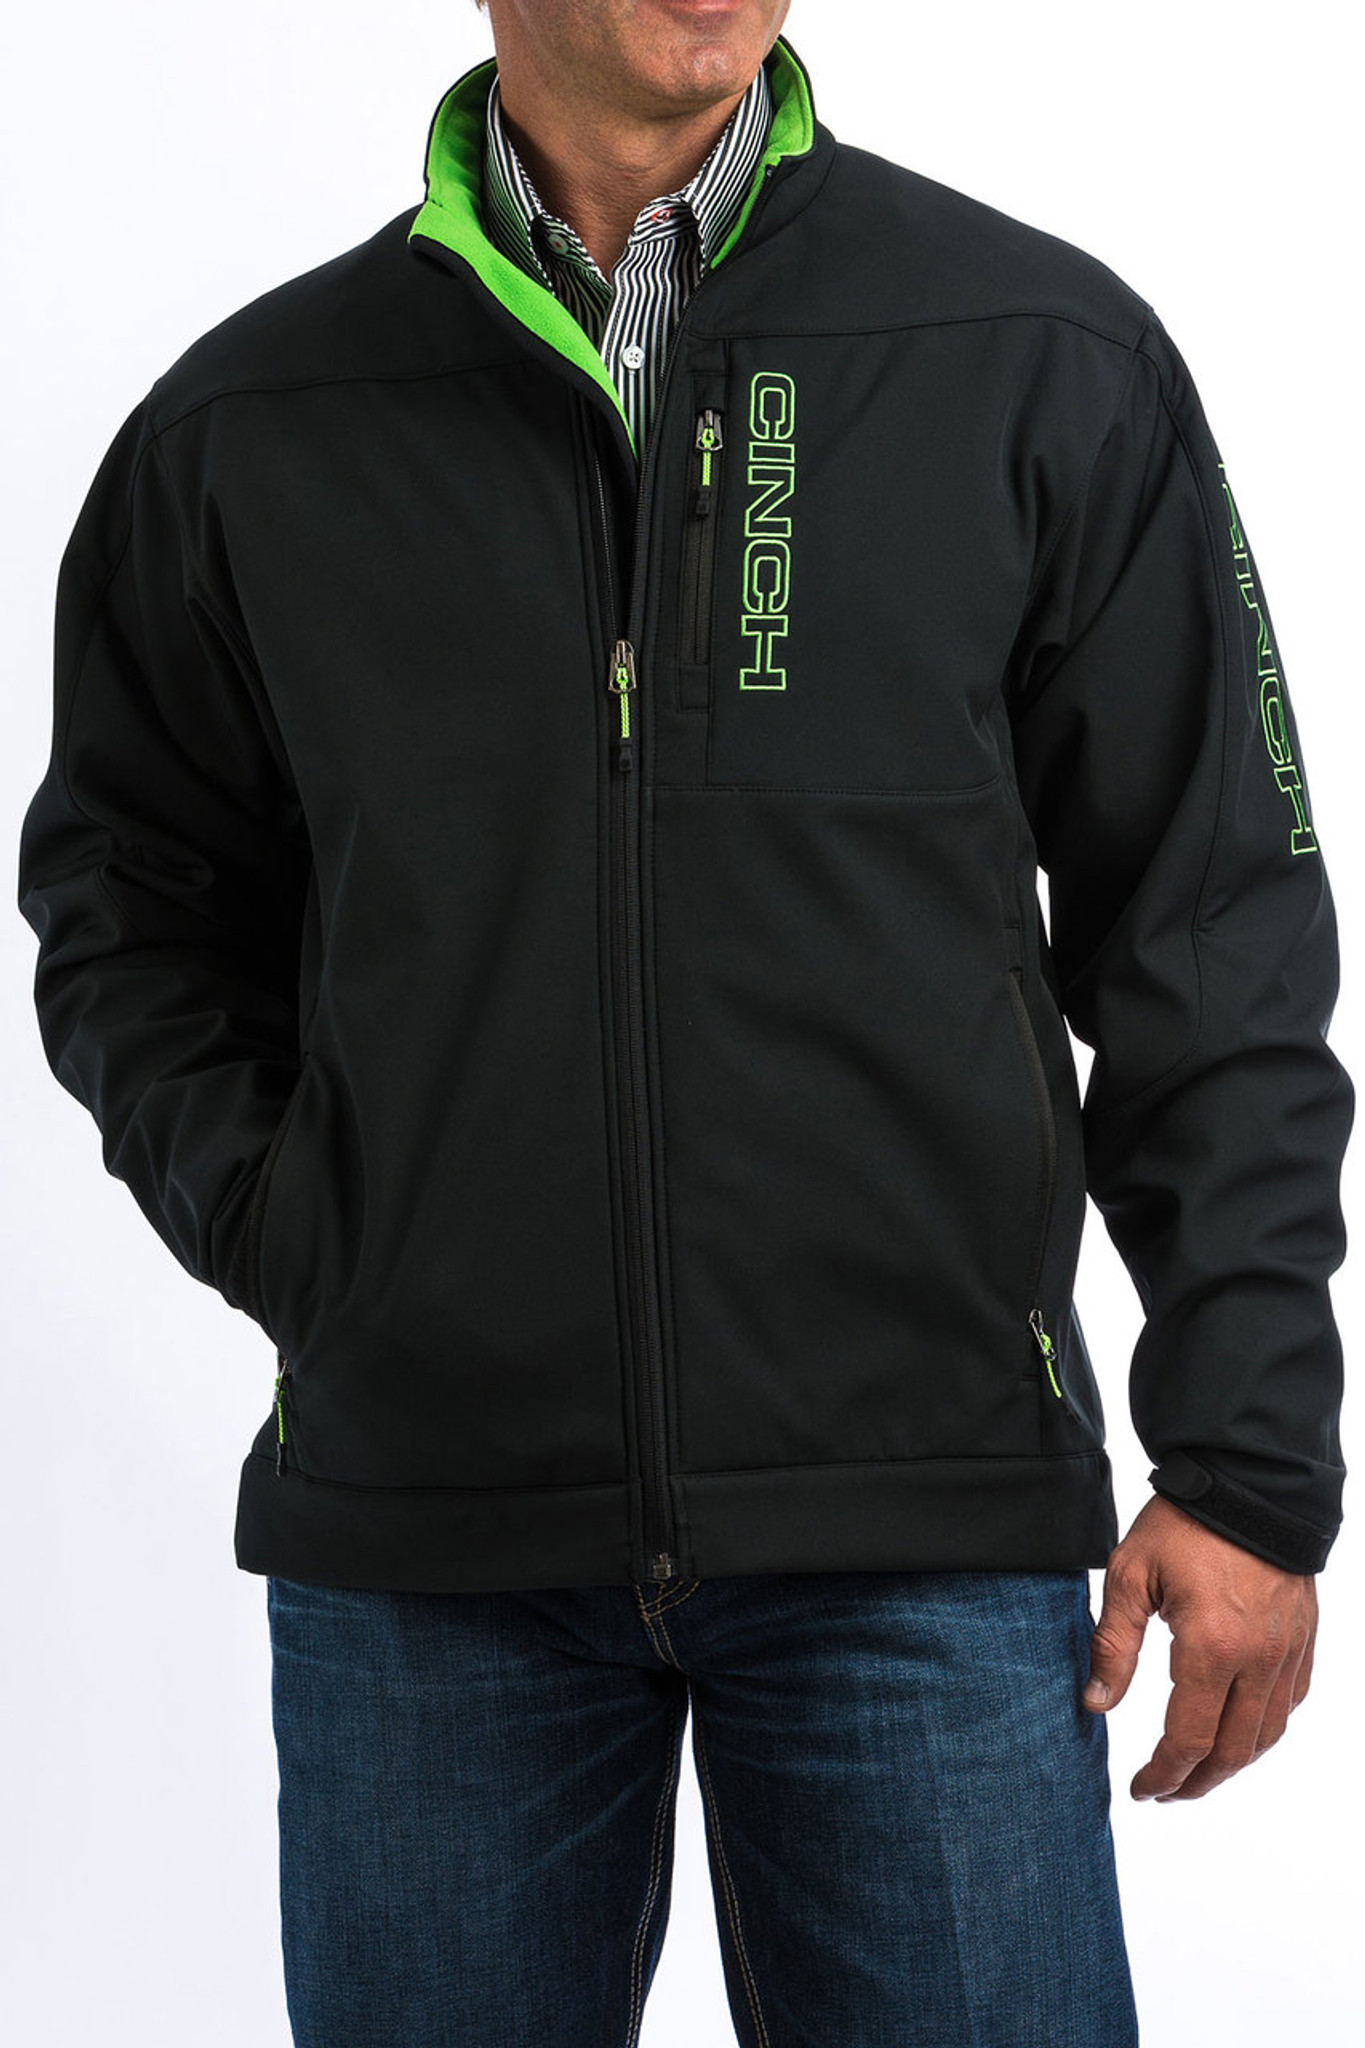 Men's Cinch Jacket, Bonded Black with Neon Green Logo - Chick Elms ...